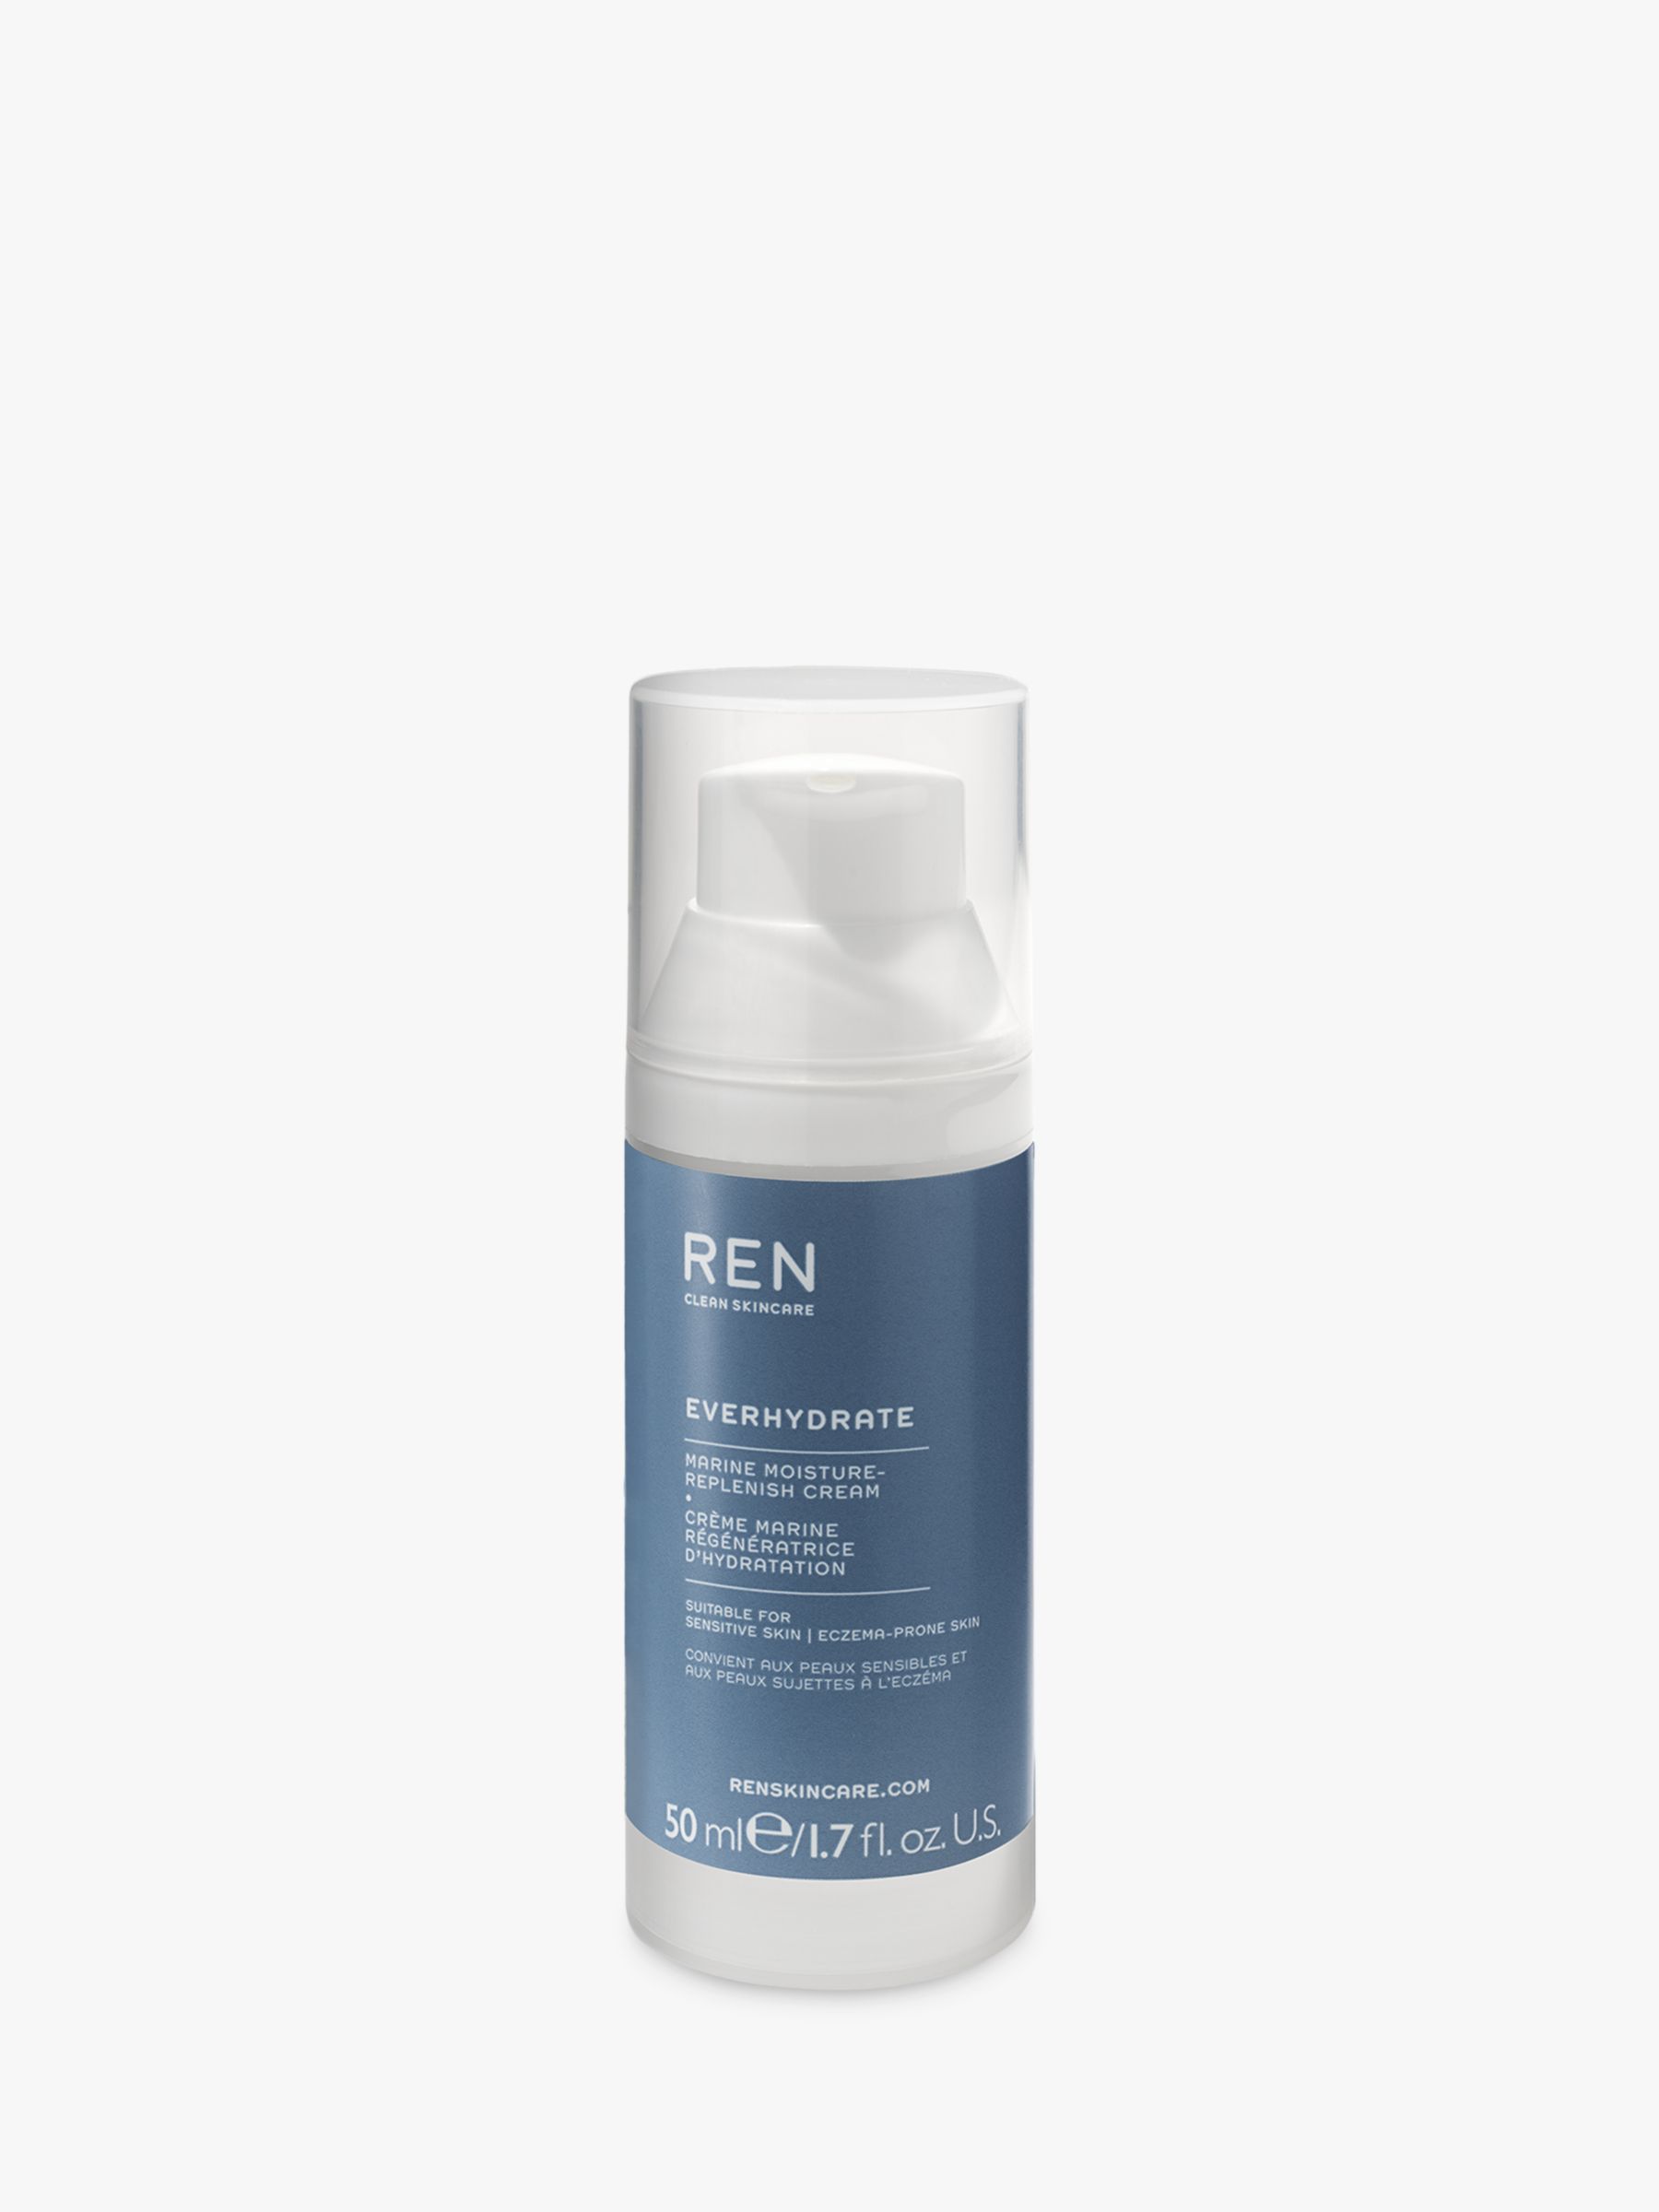 REN Clean Skincare EverHydrate Marine Moisture Replenish Cream, 50ml 1